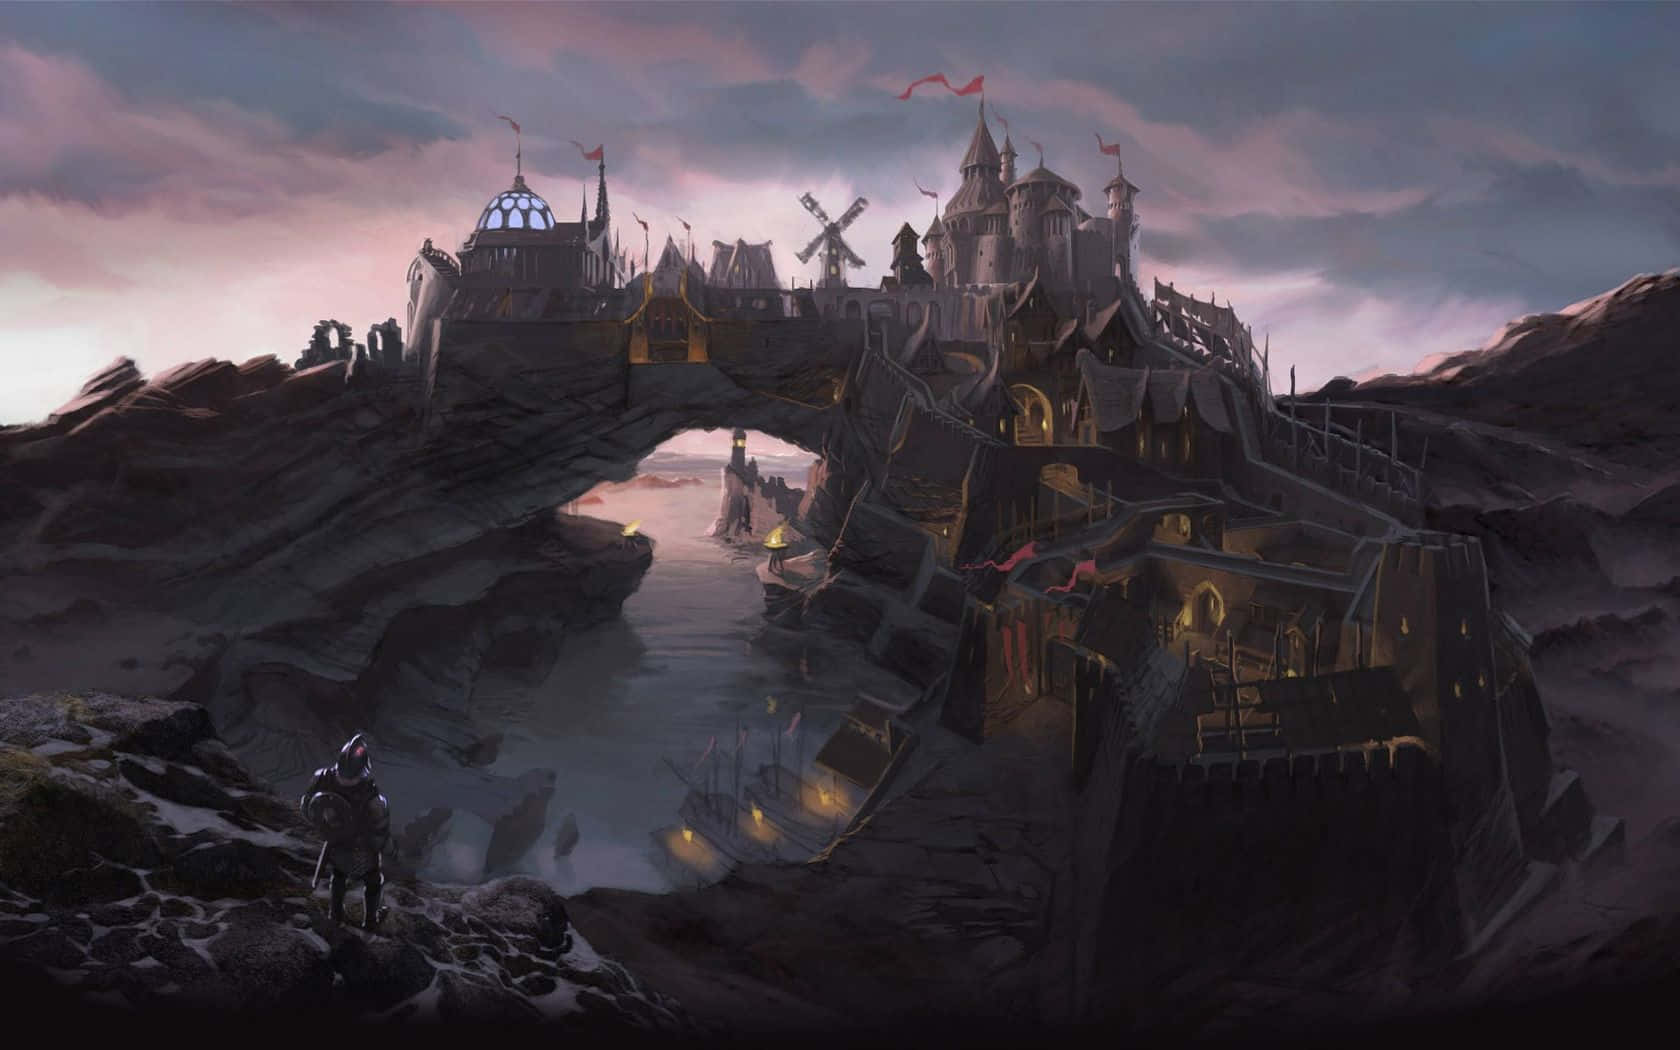 Epic fantasy adventure awaits in The Elder Scrolls V: Skyrim Wallpaper